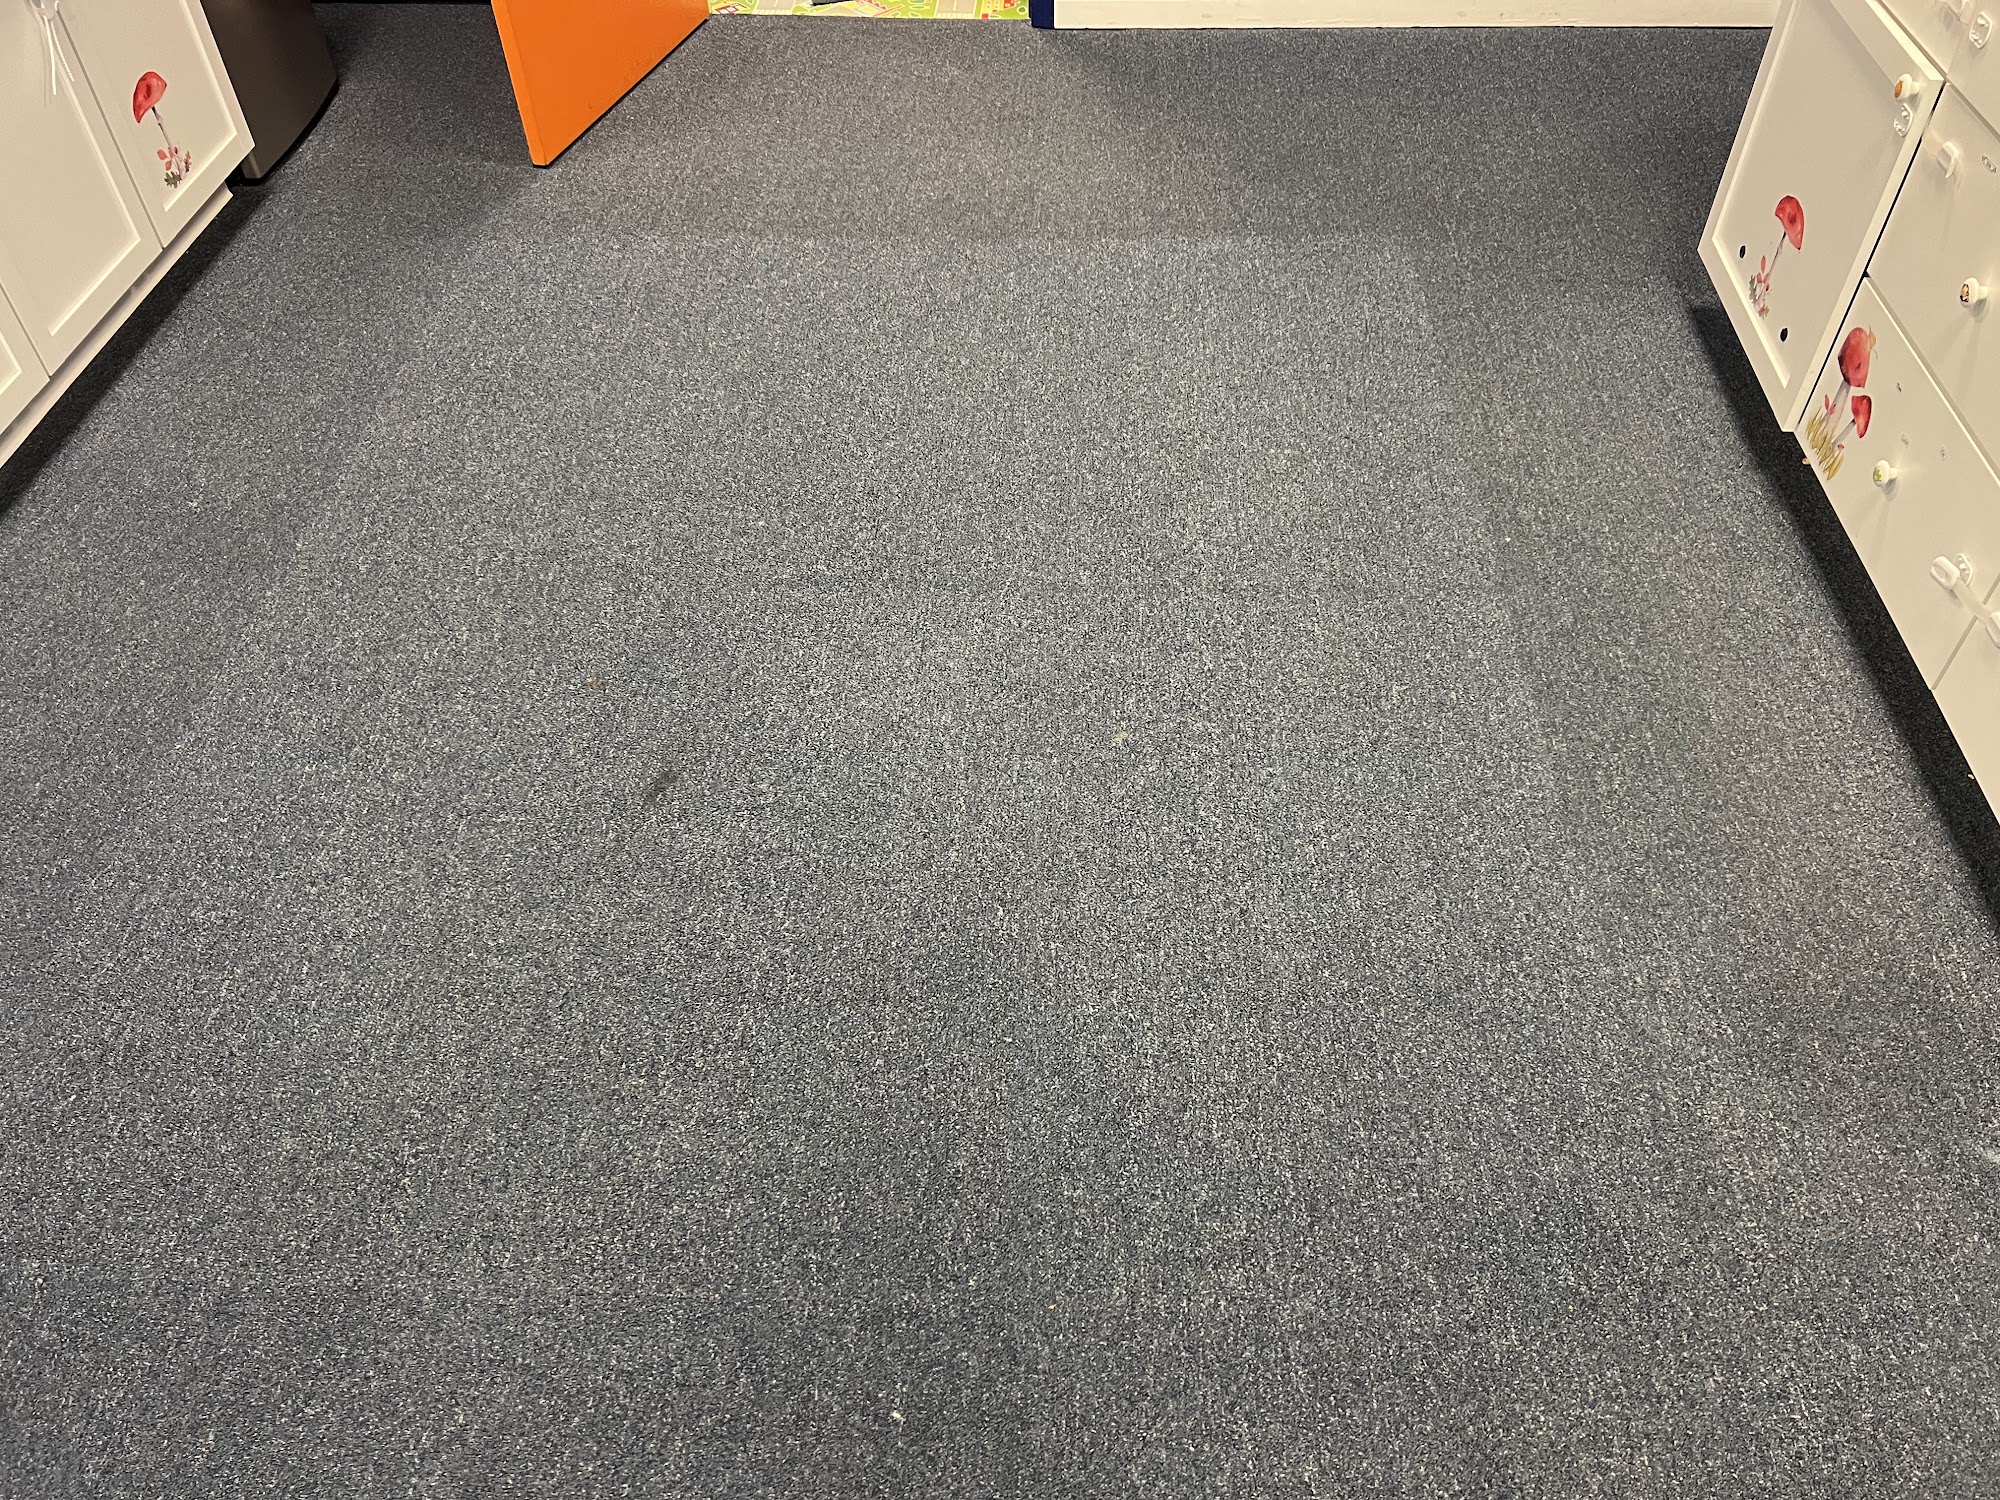 Spotlezz Carpet Cleaning 90 Purchase St, Rehoboth Massachusetts 02769